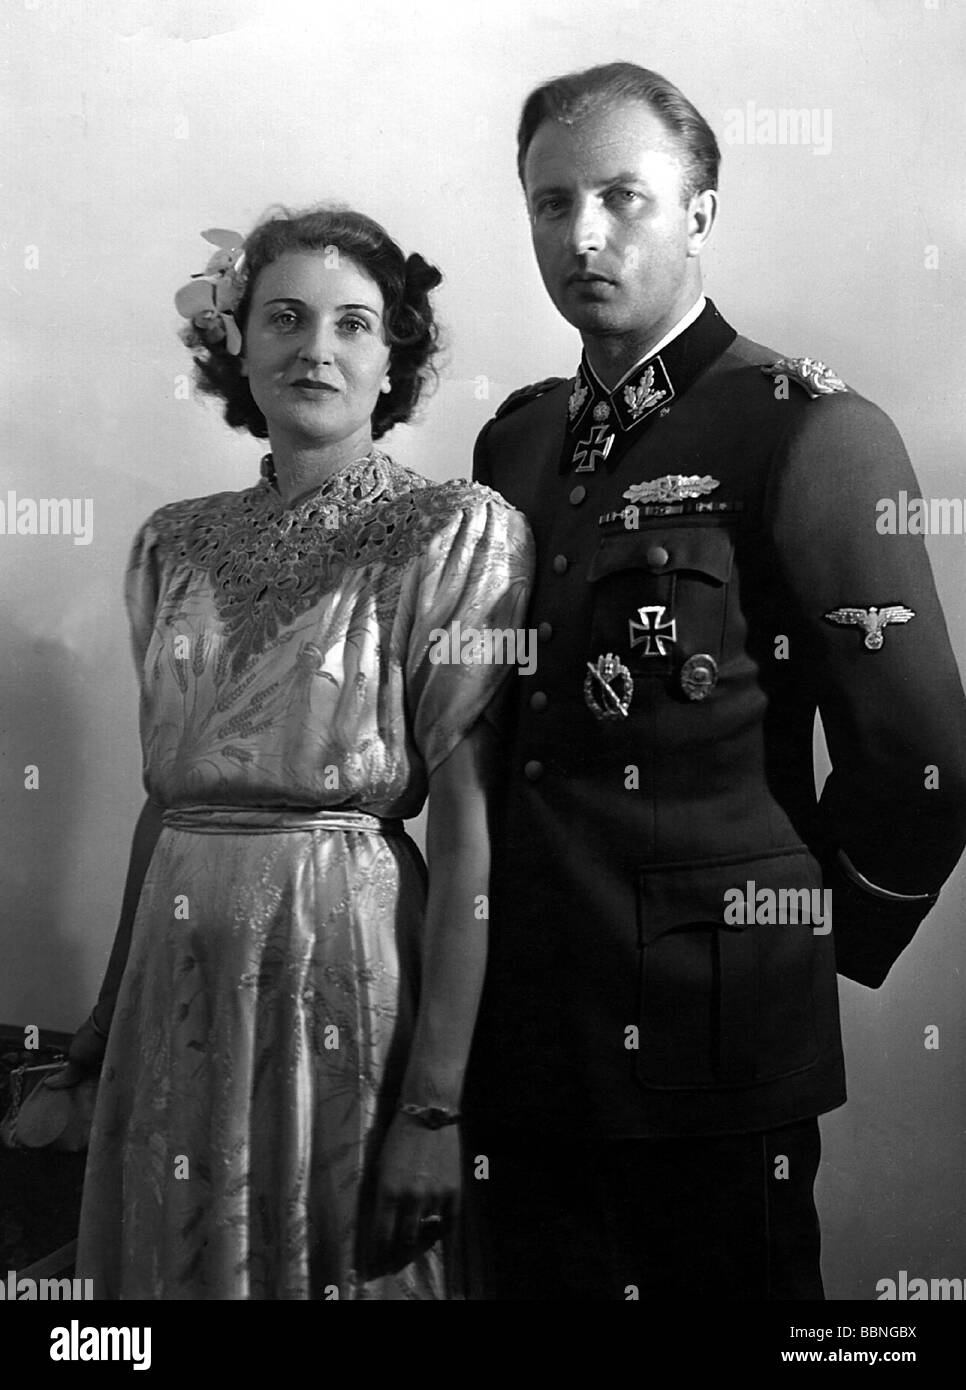 Fegelein, Hermann, 30.10.1906 - 28.4.1945, German general, with wife Margarete 'Gretl' Braun, early 1945, , Stock Photo